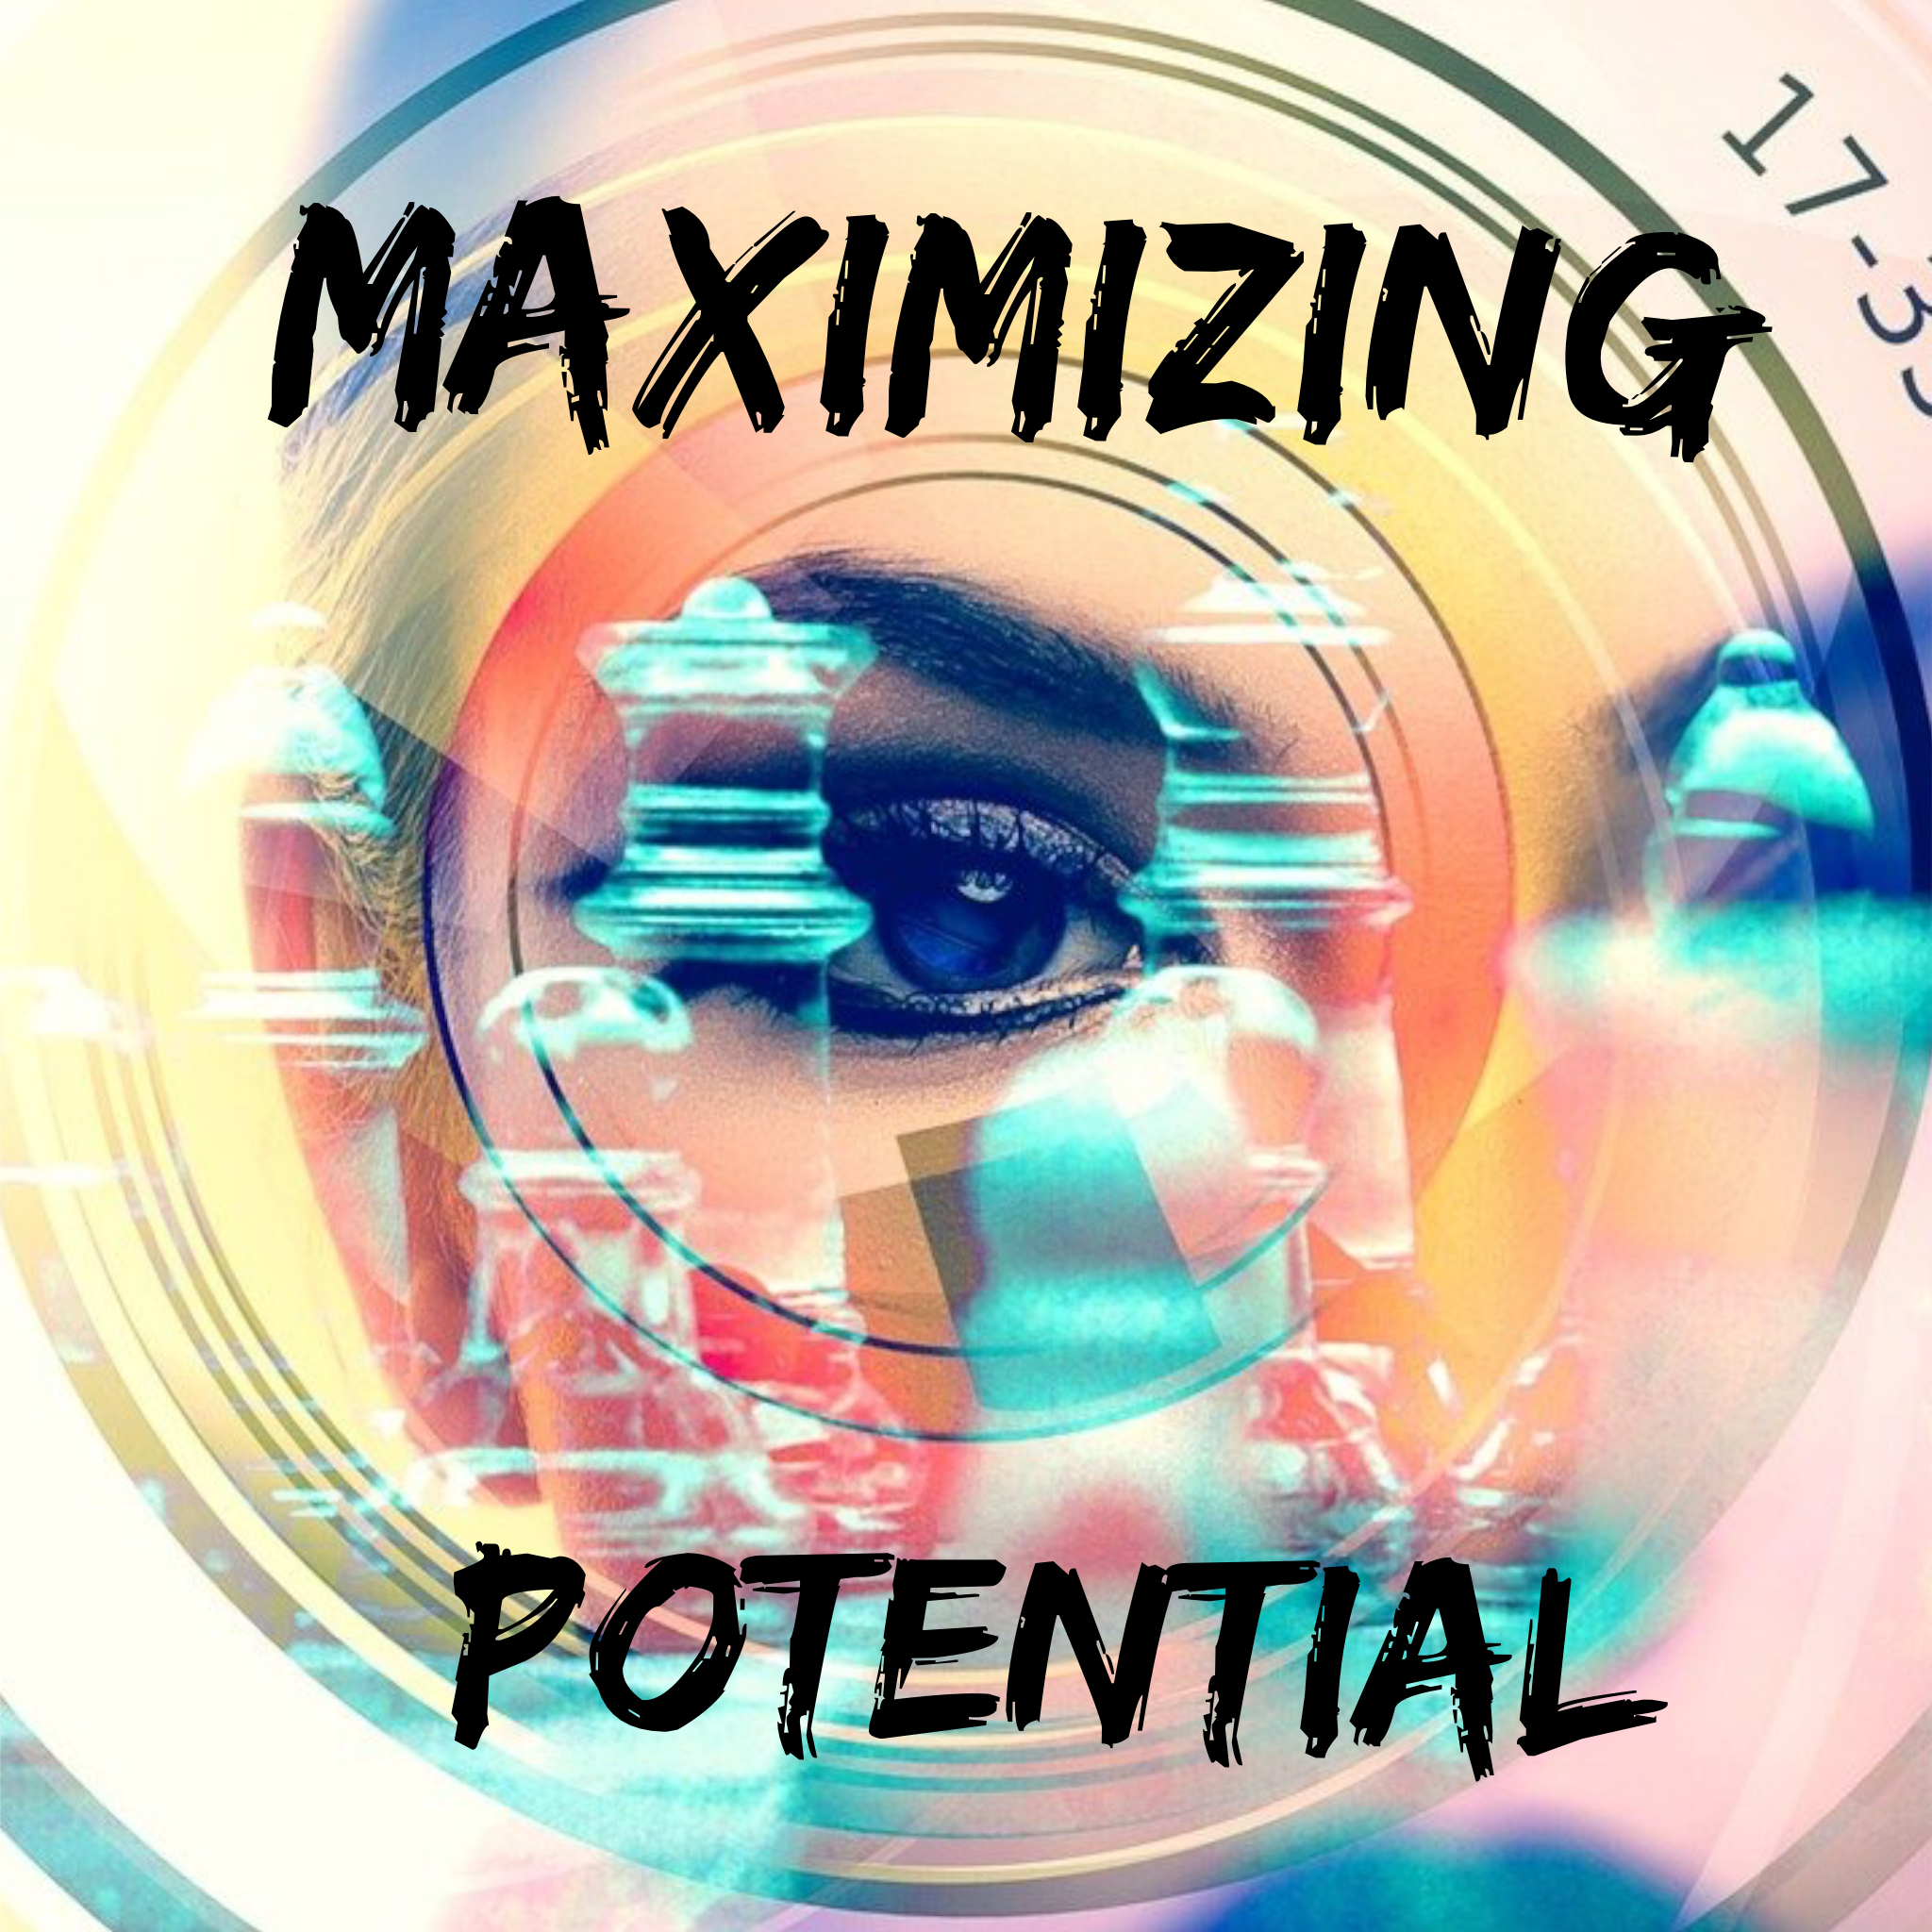 Maximizing Potential - 9/12/21